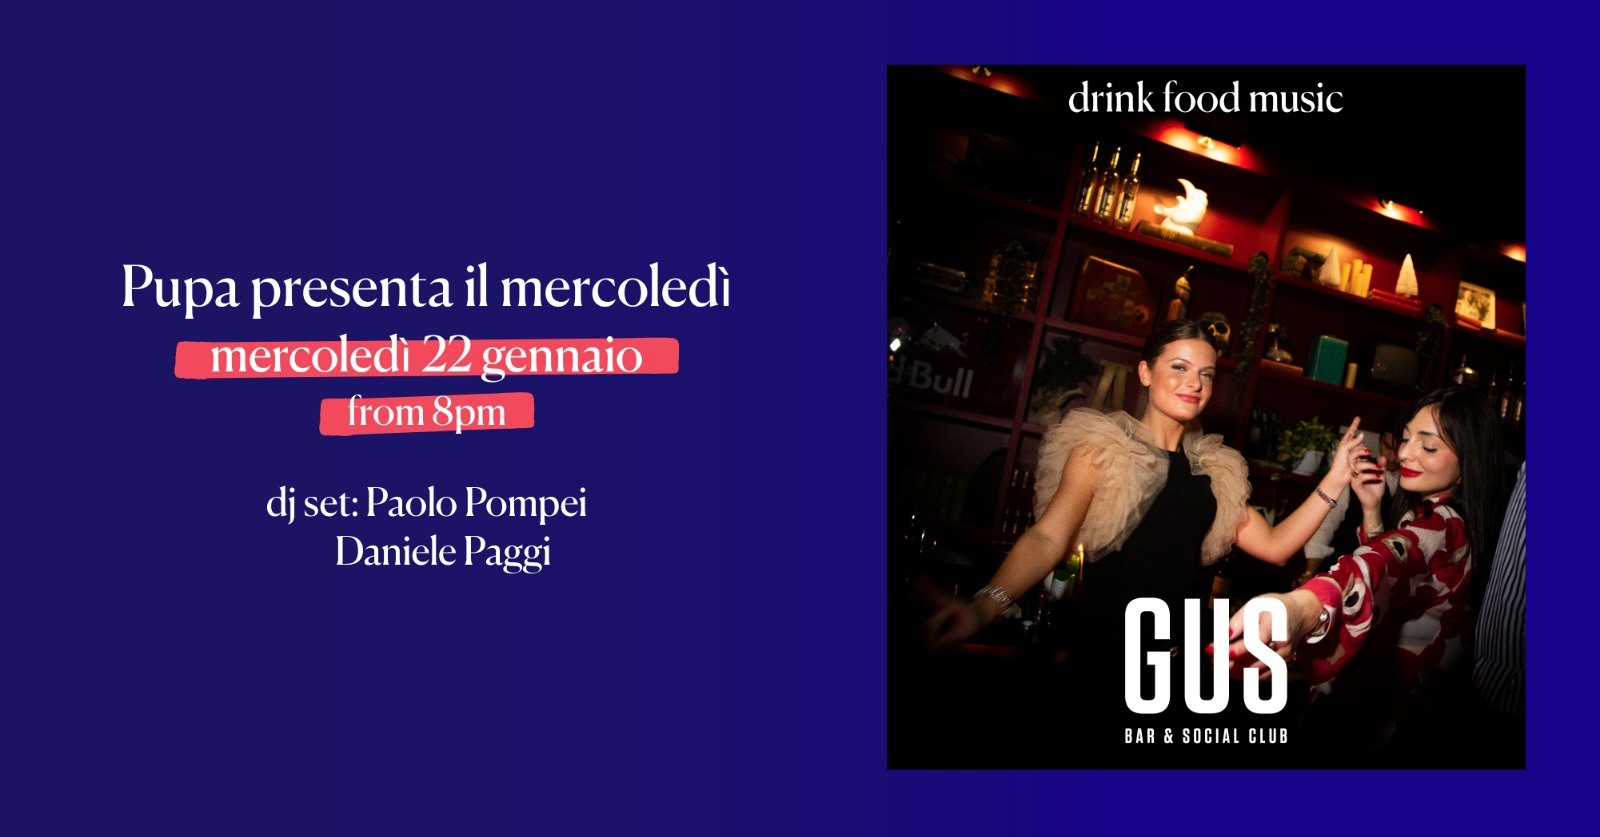 L'aperitivo al Gus Club mercoledì 29 gennaio 2020 in zona Prati